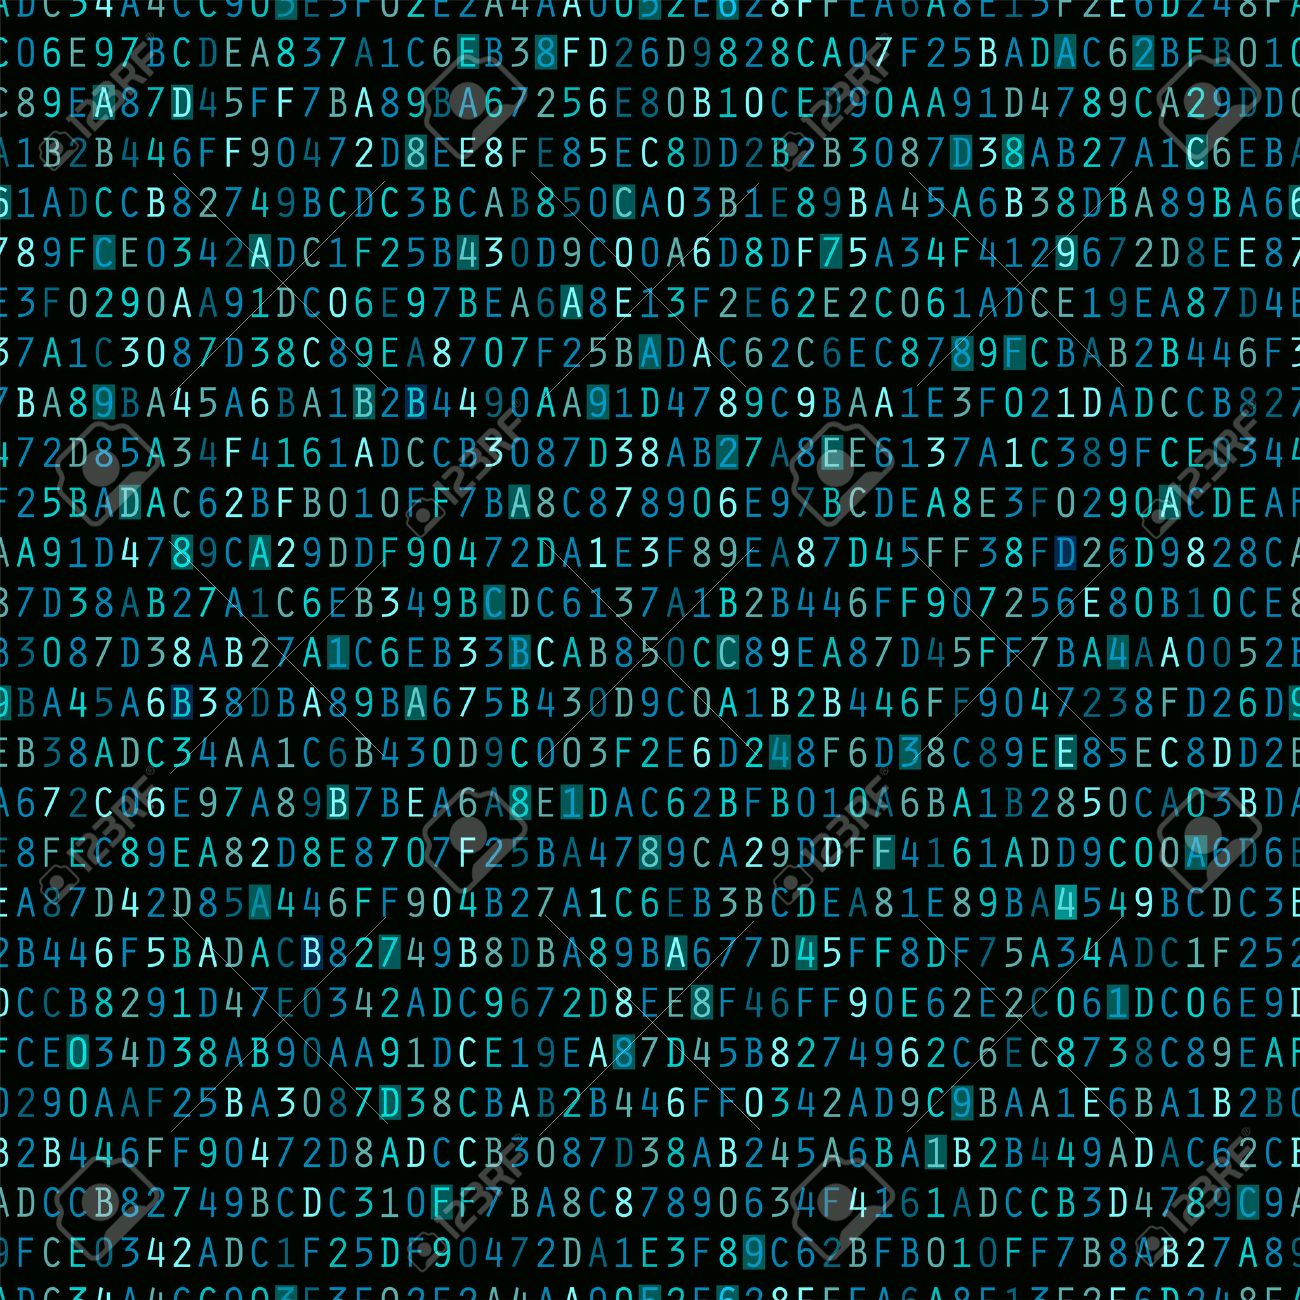 Blue Hexadecimal Puter Code Repeating Vector Background